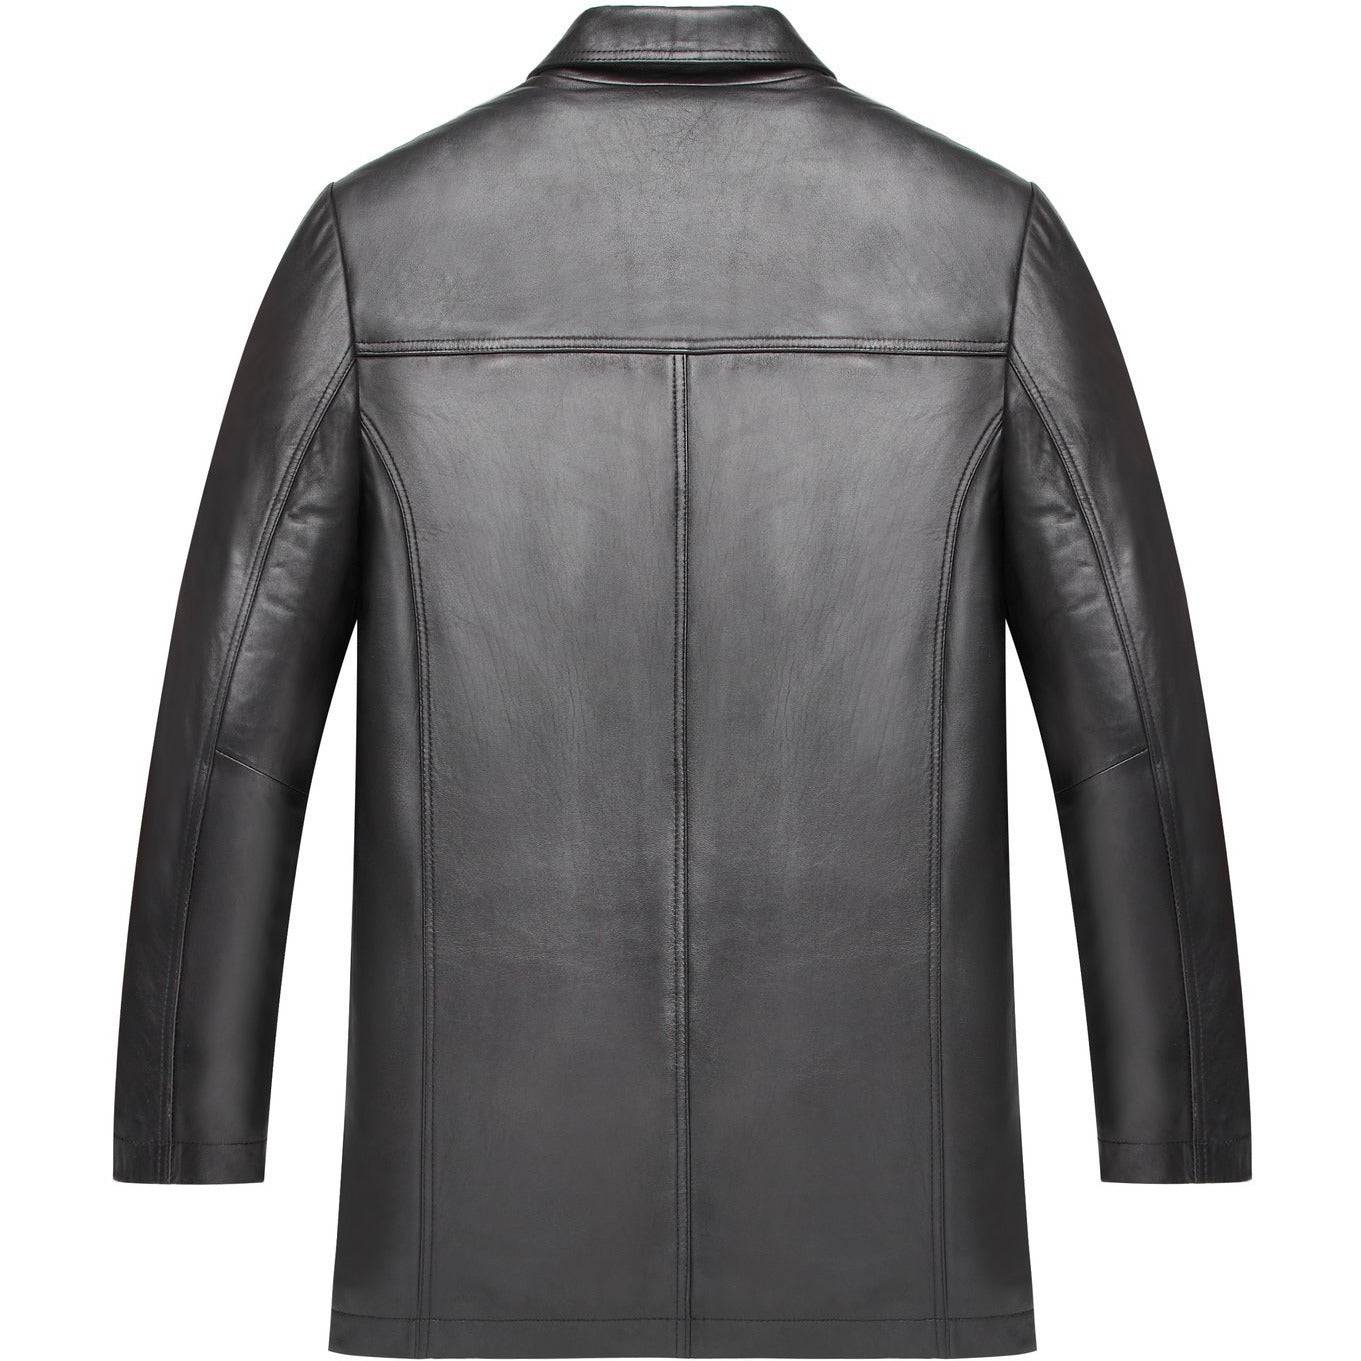 Mason & Cooper Men's Brasco Leather Jacket